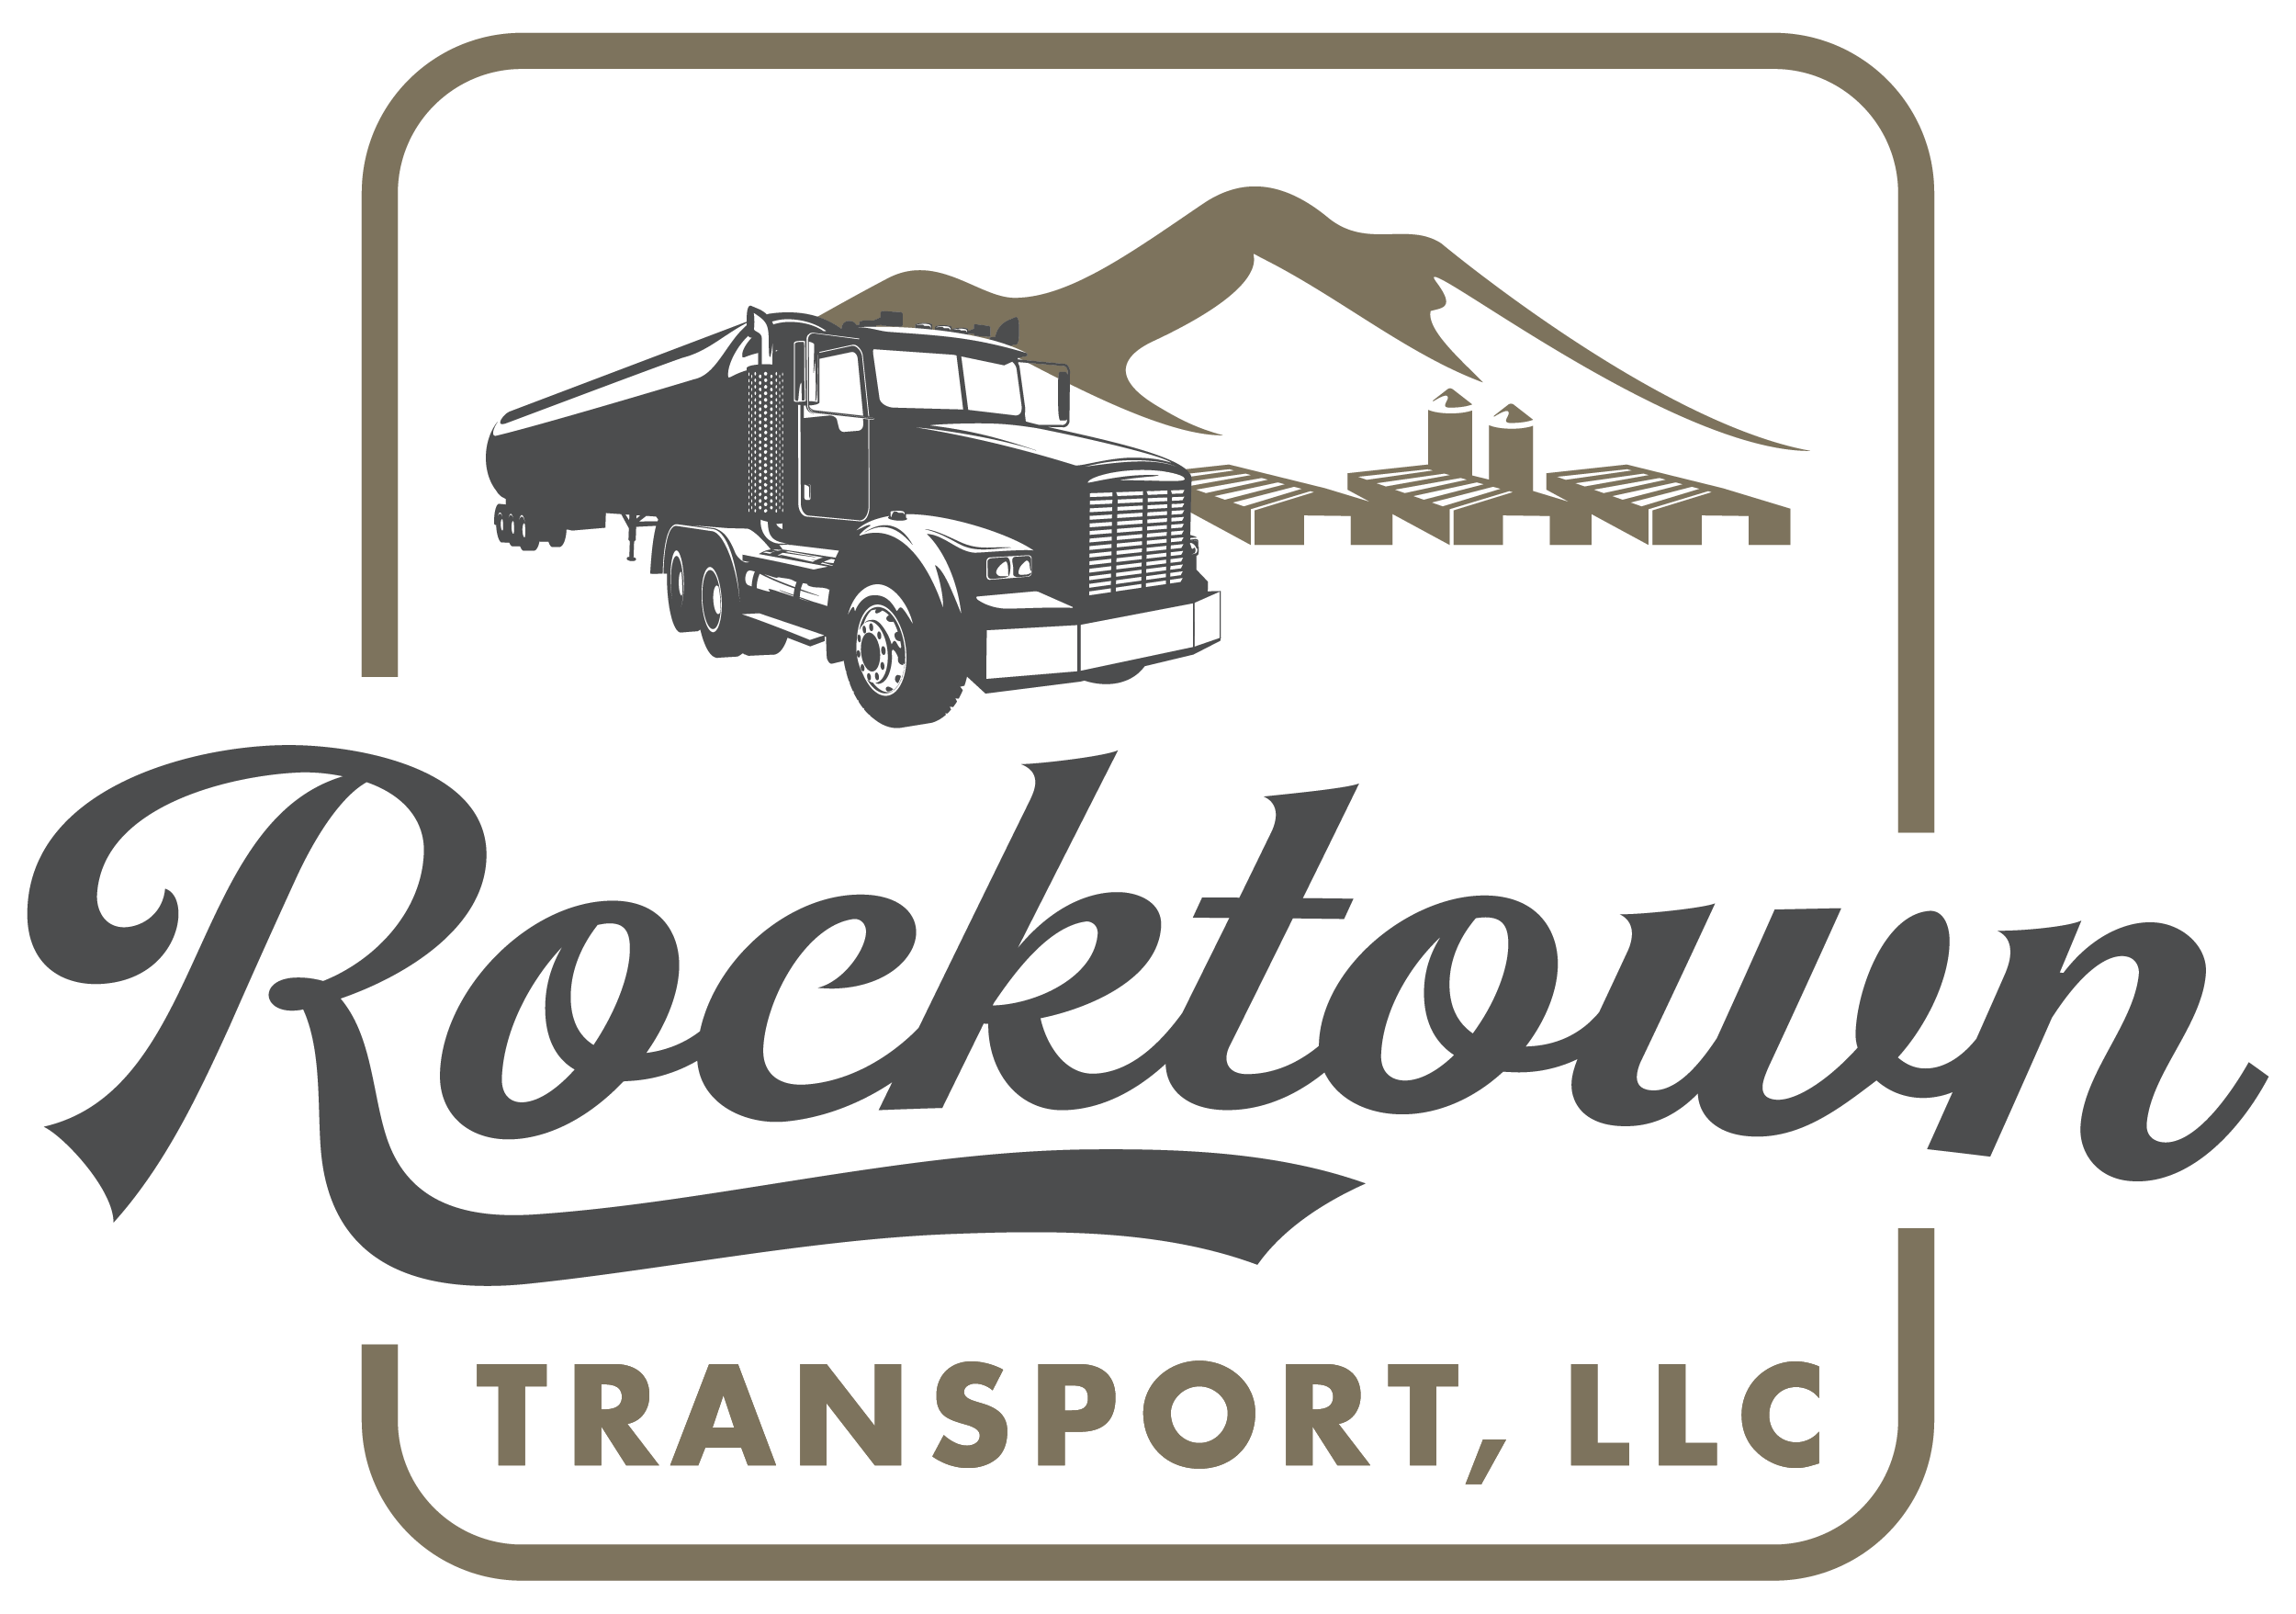 Rocktown Transport